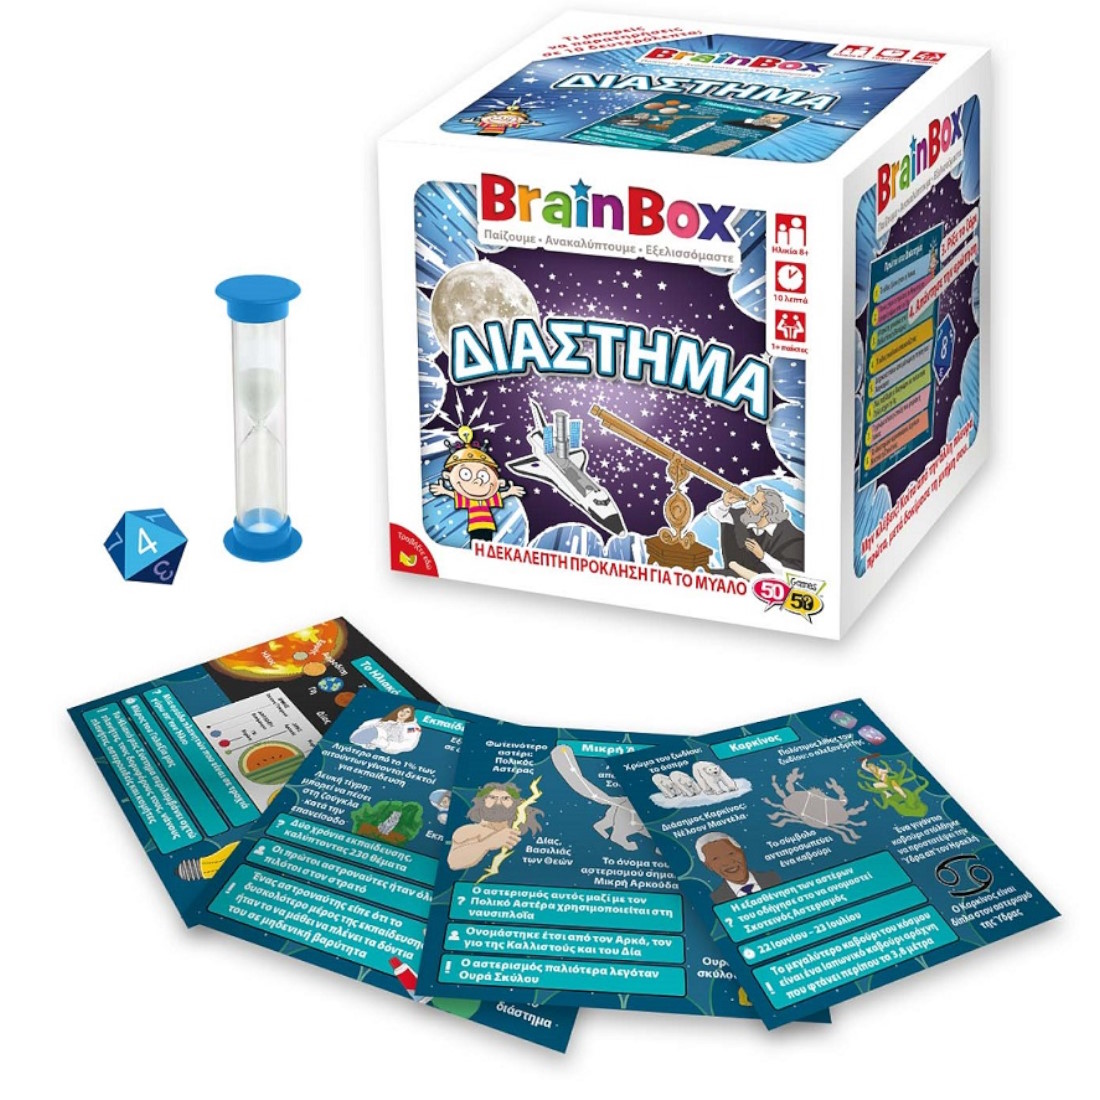 BrainBox-CardGame-Space-93048